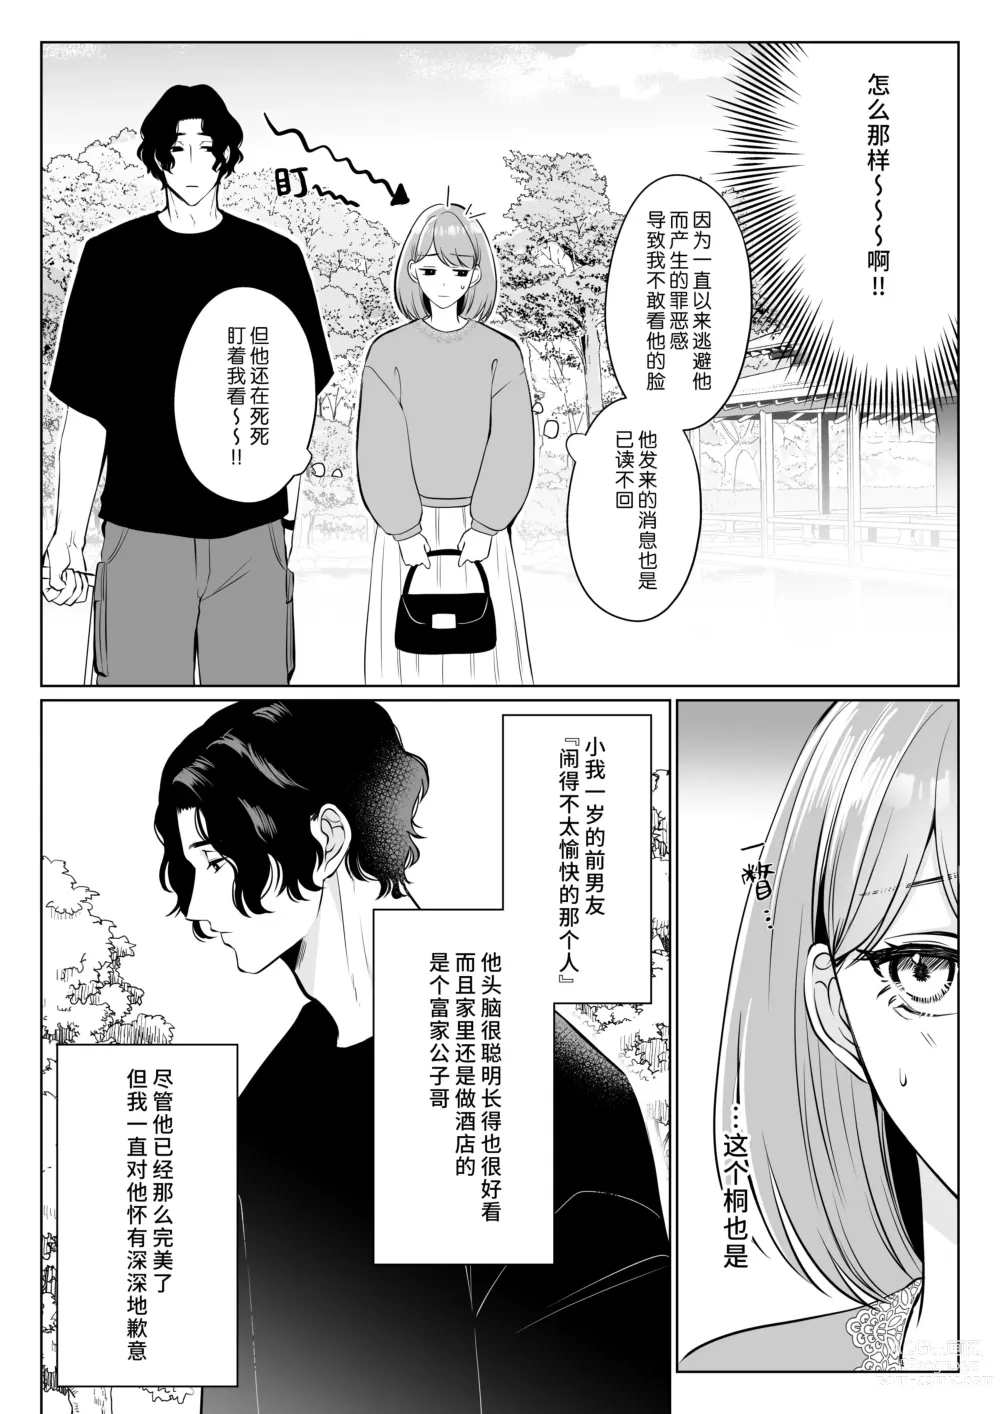 Page 7 of doujinshi 前任桐也沉重而又扭曲的爱